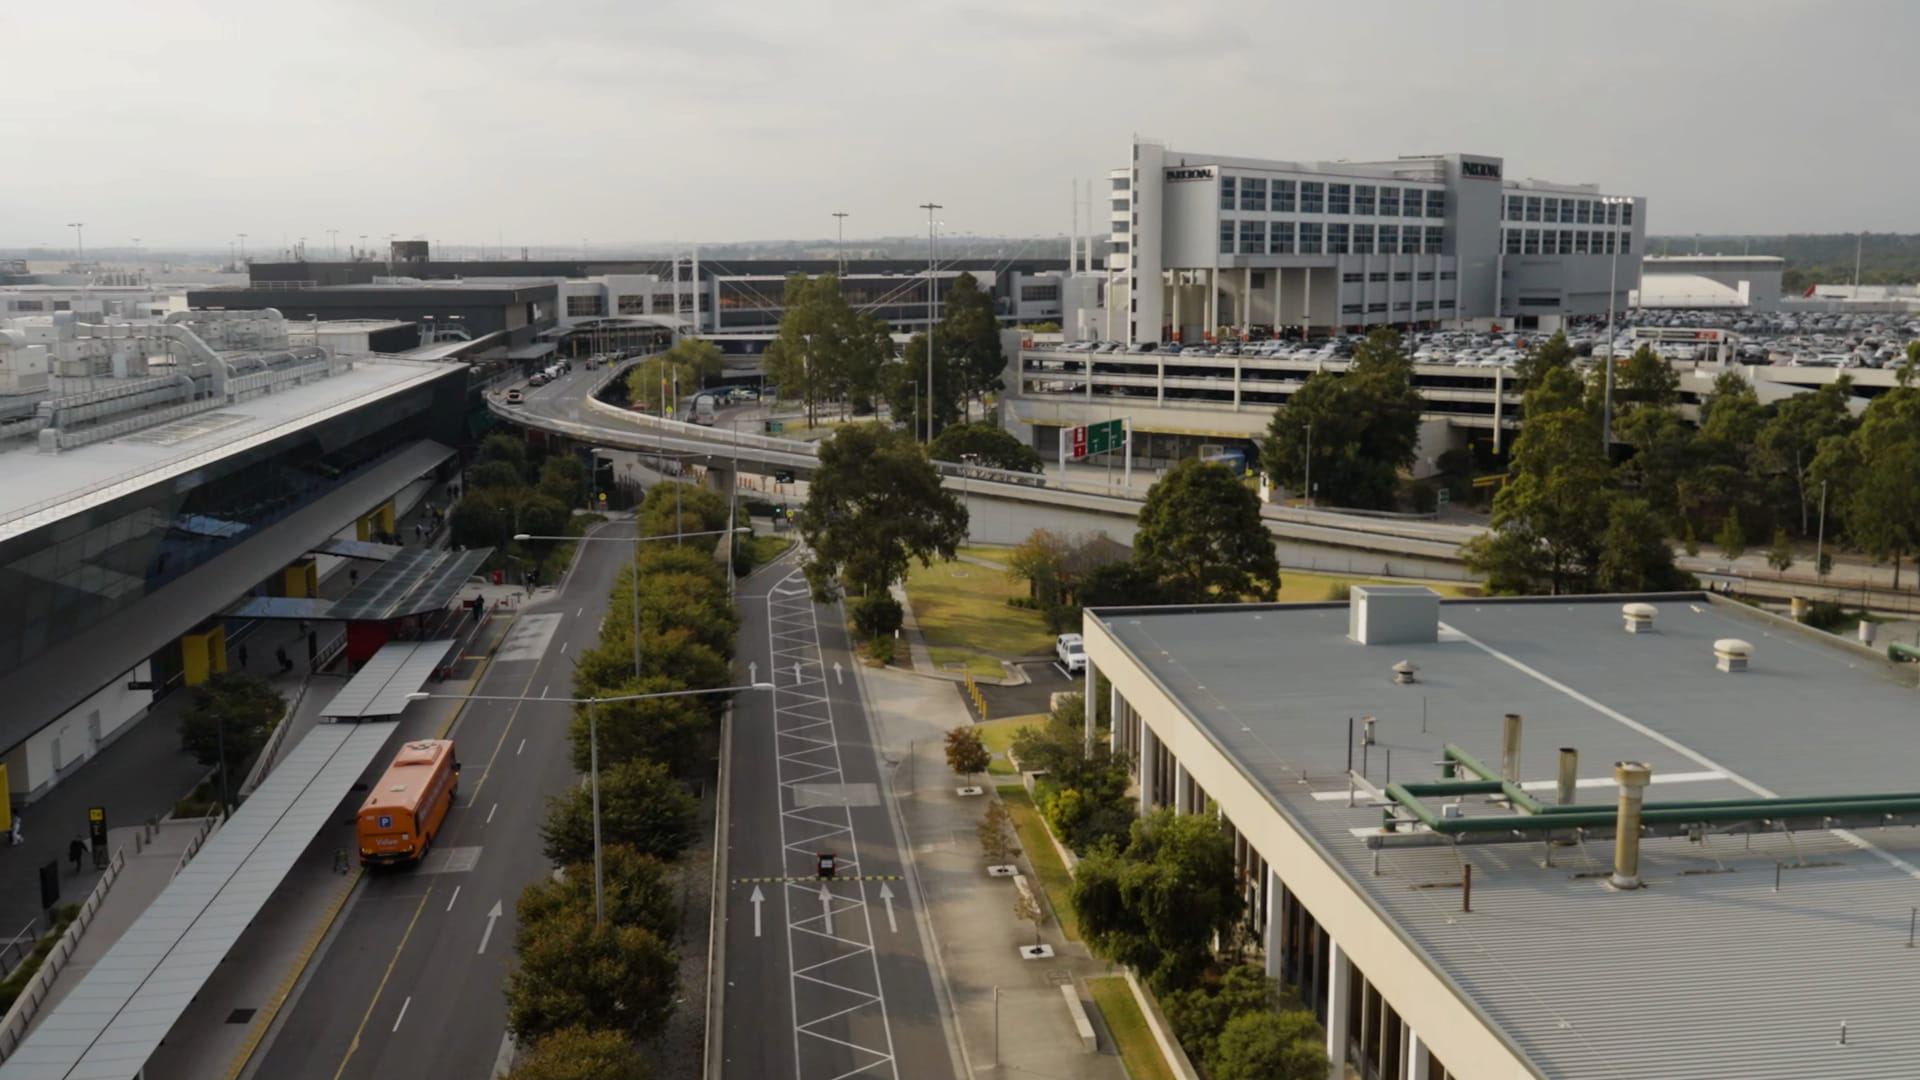 Melbourne Airport External View